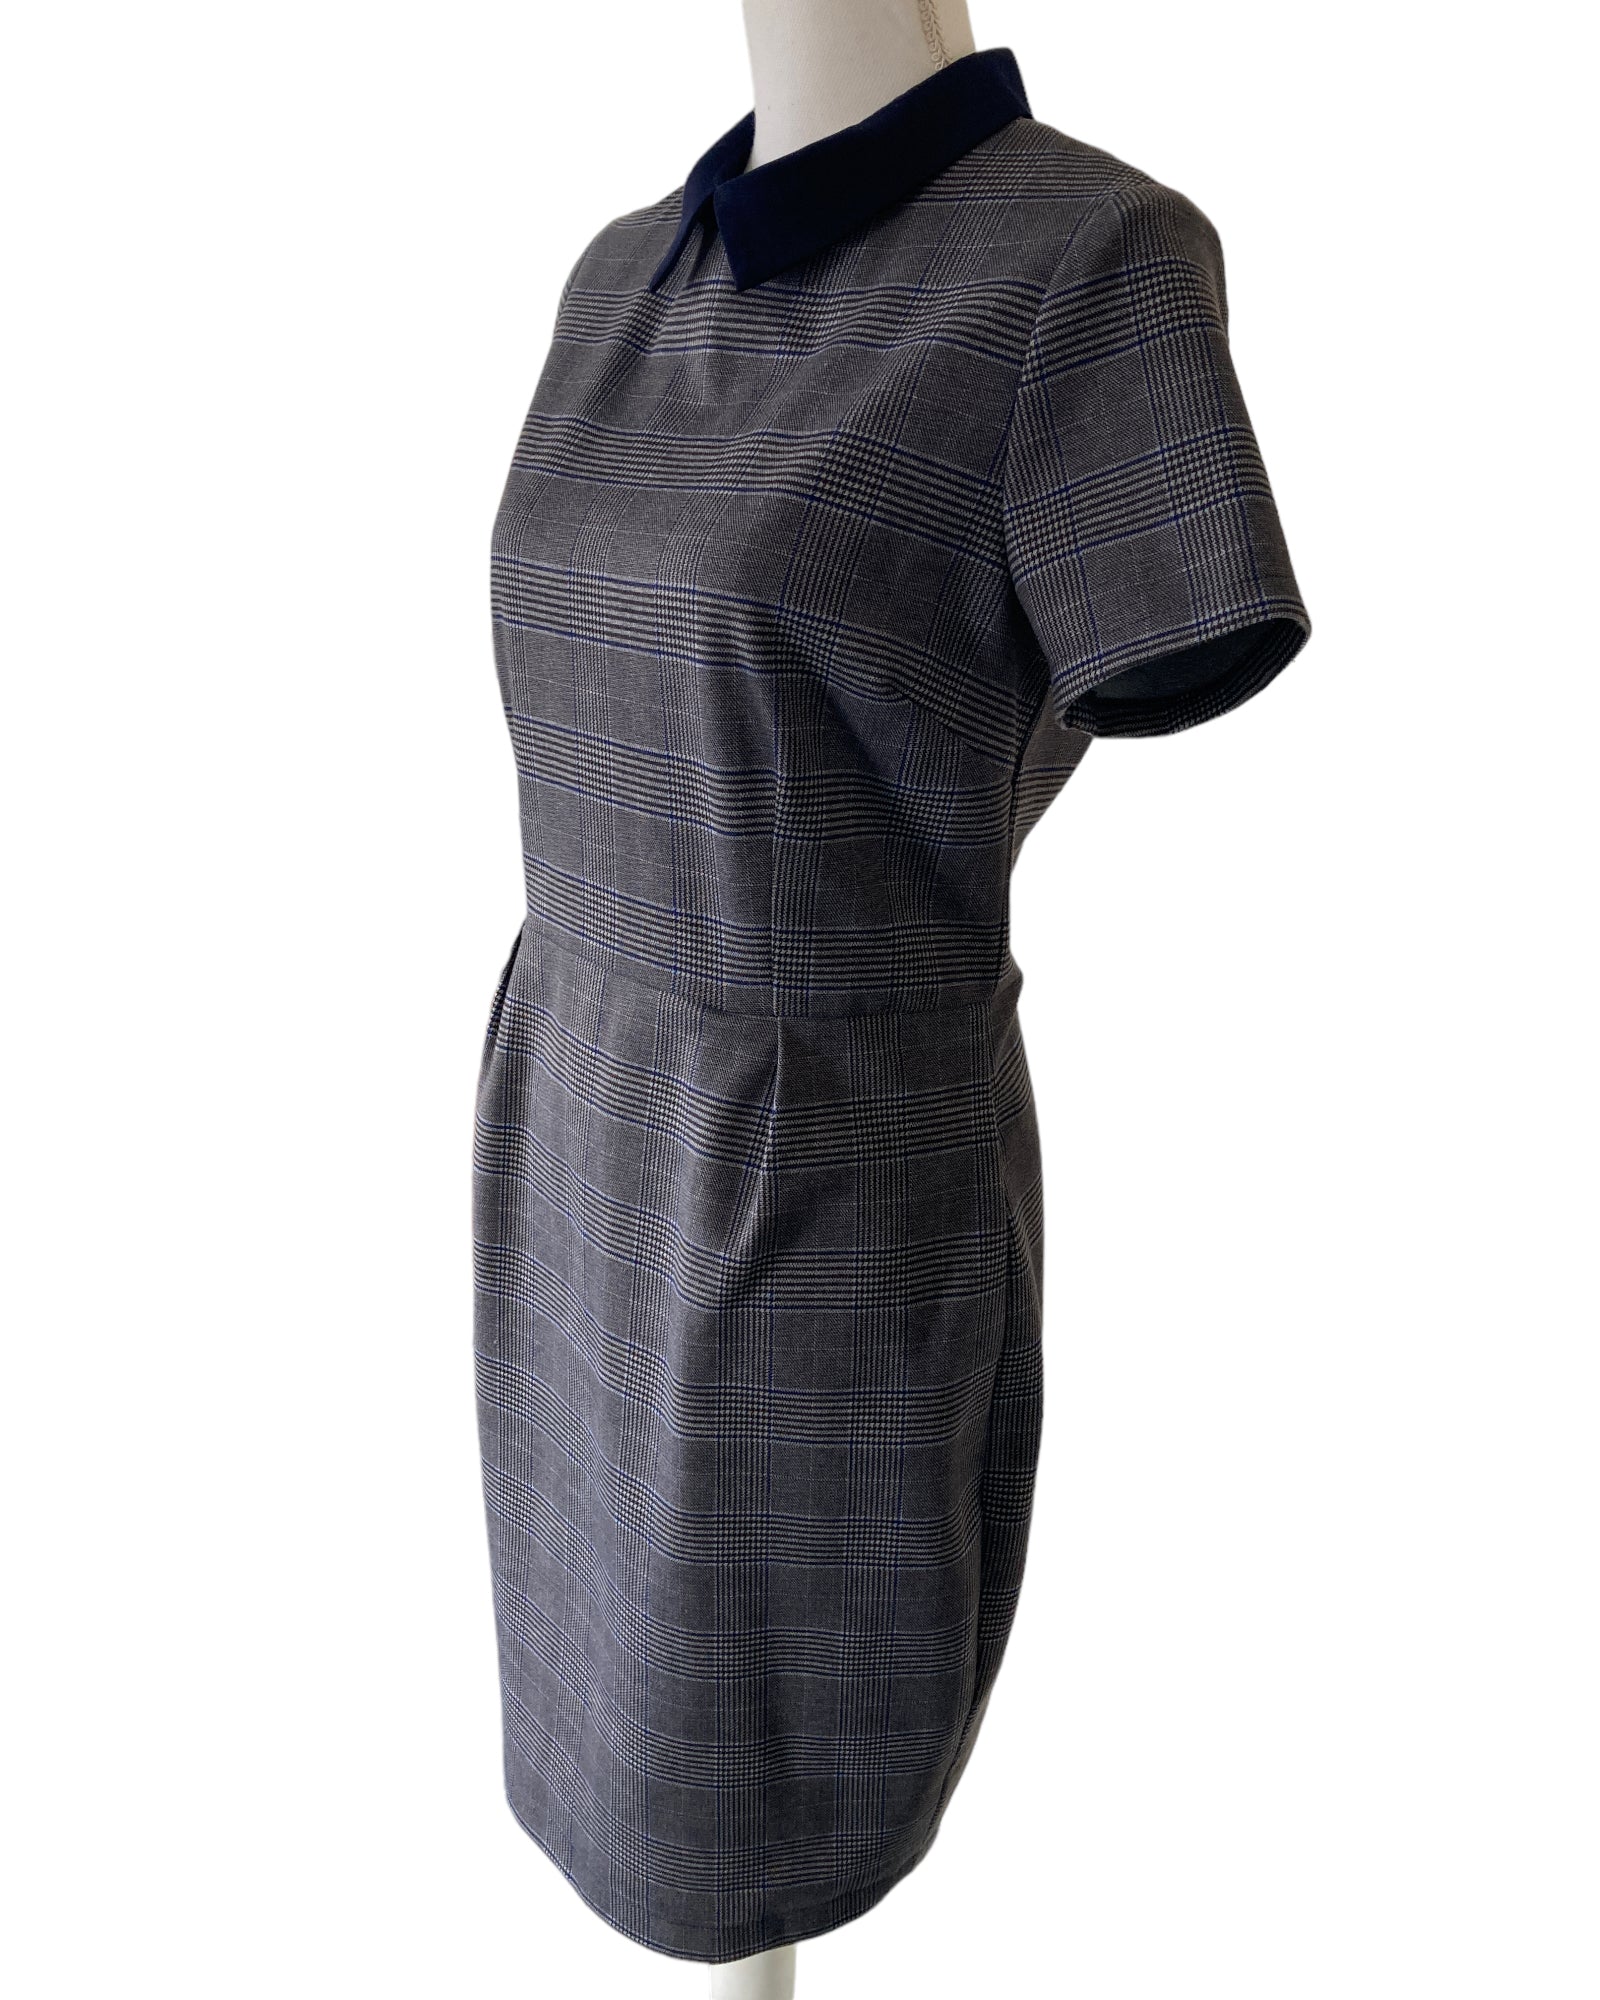 Joanie Blue and Black Plaid Short Sleeve Dress, 8